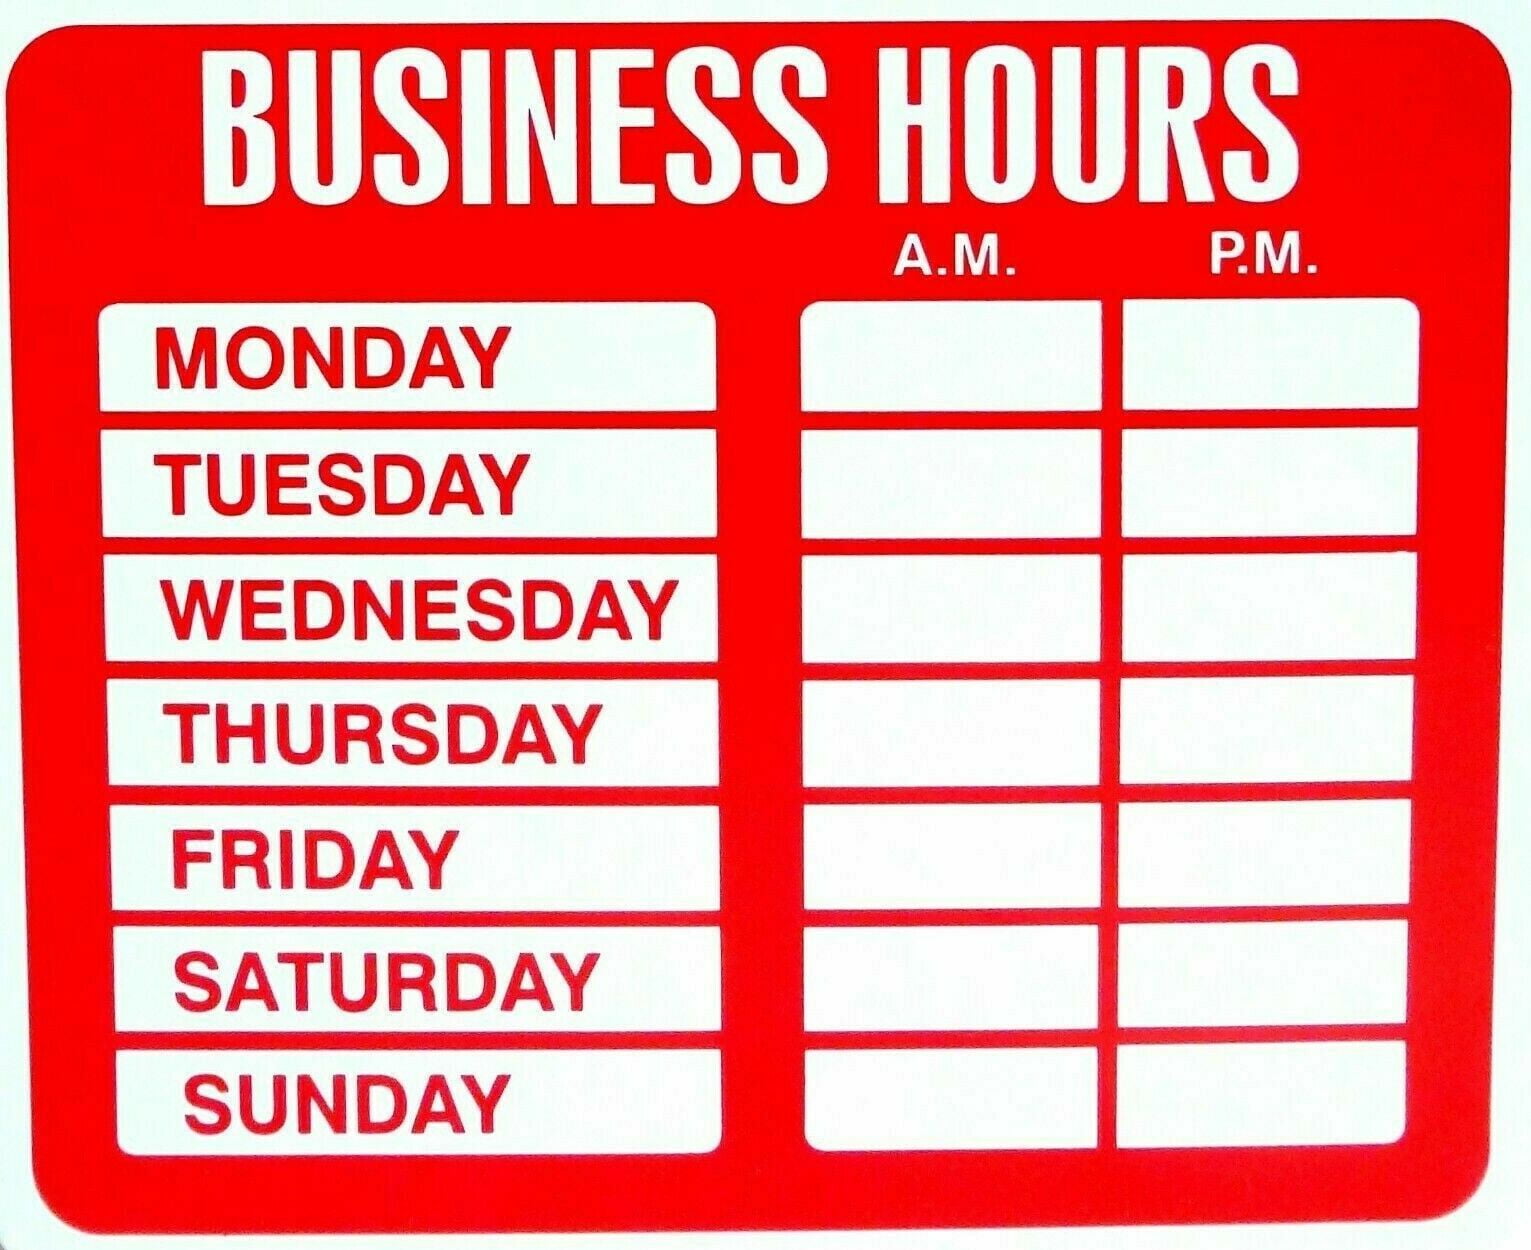 Business hours. Понедельник табличка. Sunday Monday Tuesday. Табличка working hours английском.